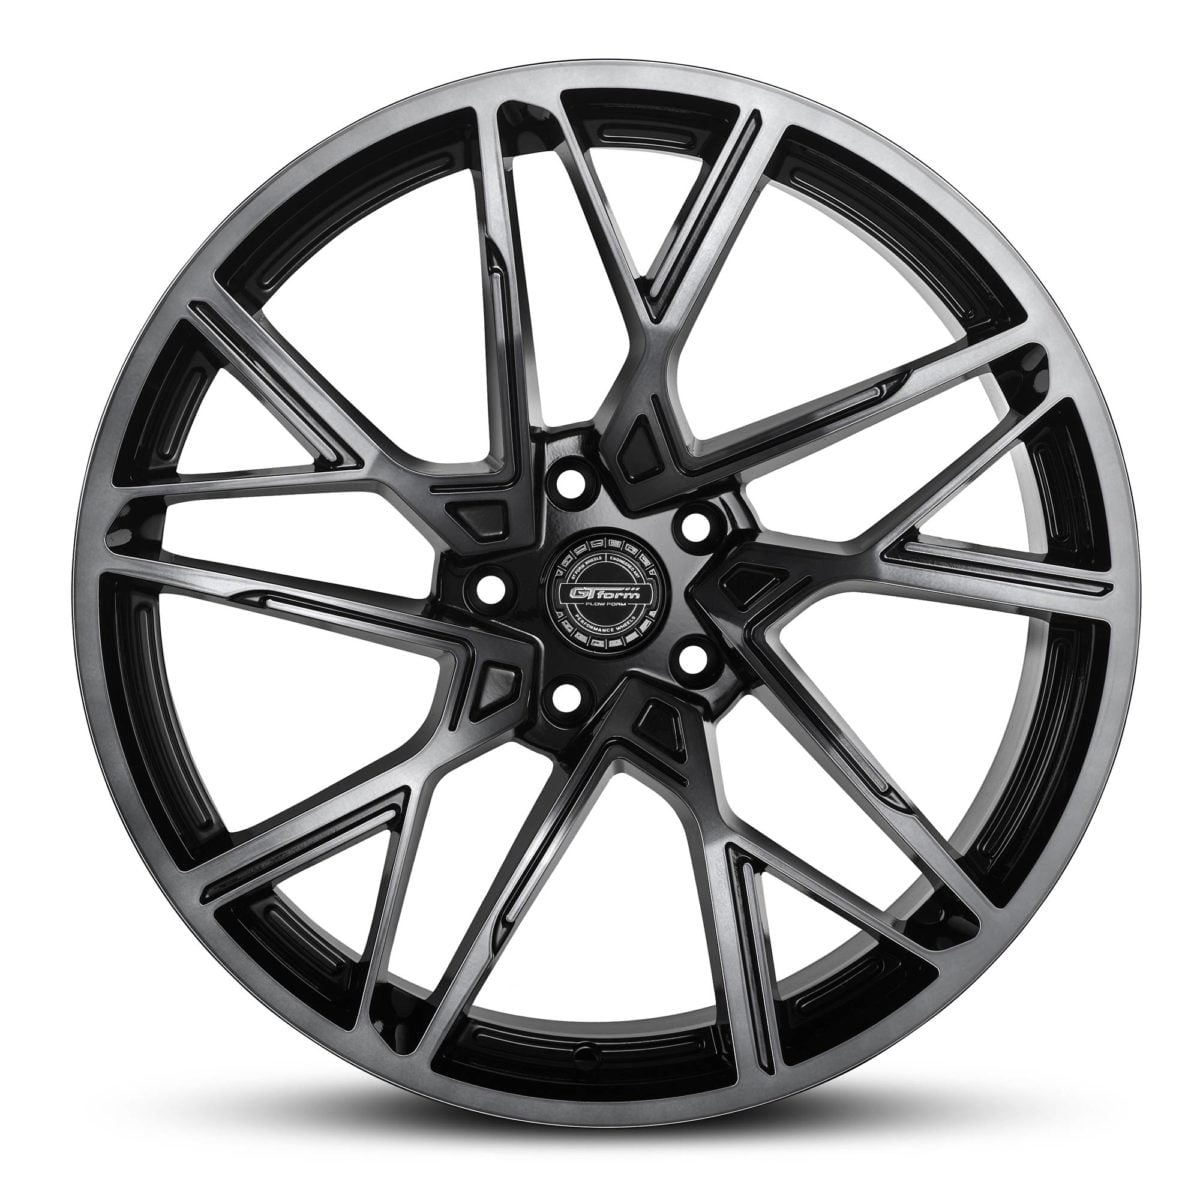 GT Form Interflow gloss black tinted wheels performance rims